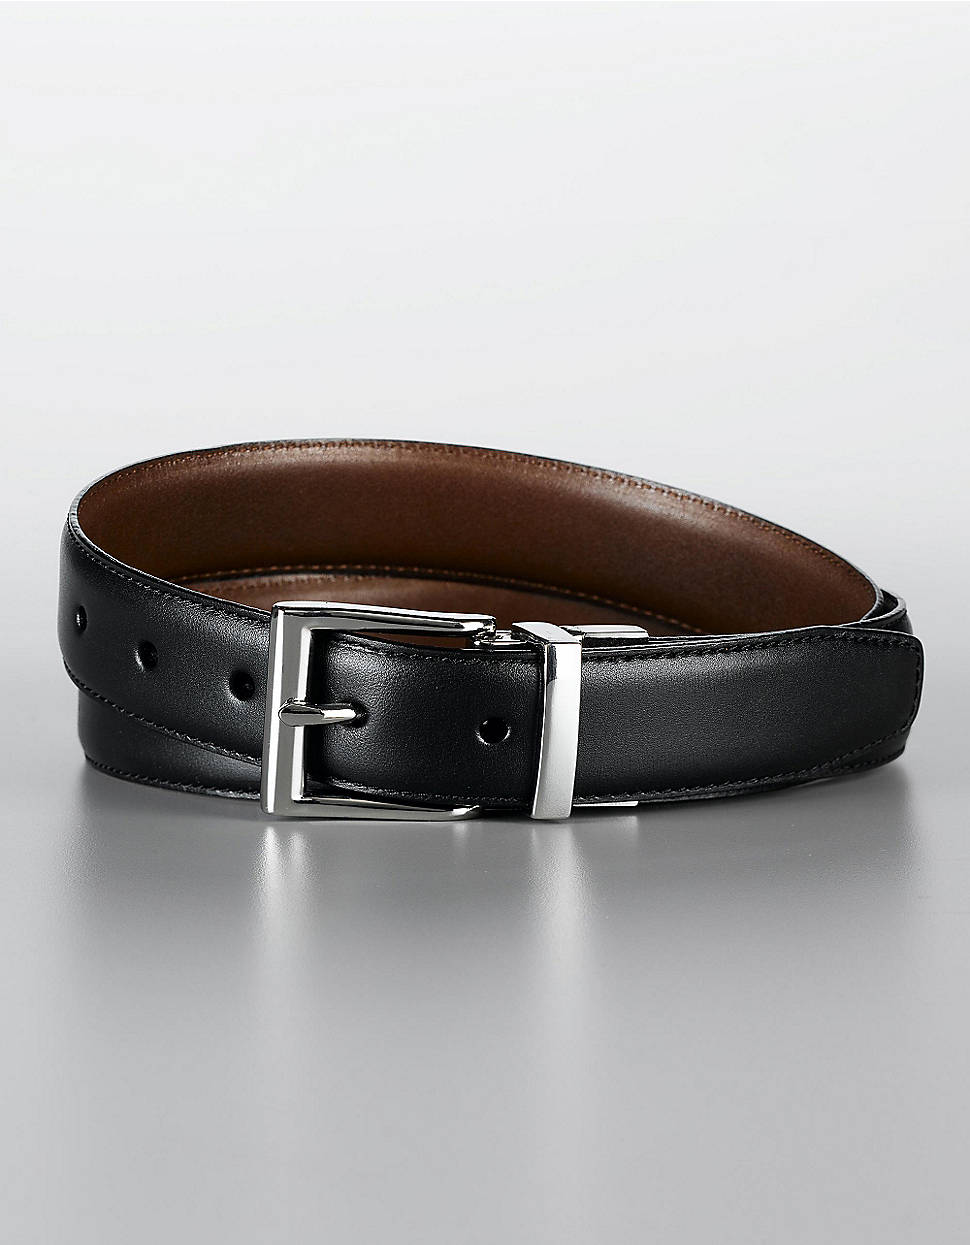 Polo Ralph Lauren Reversible Belt in Black for Men - Lyst